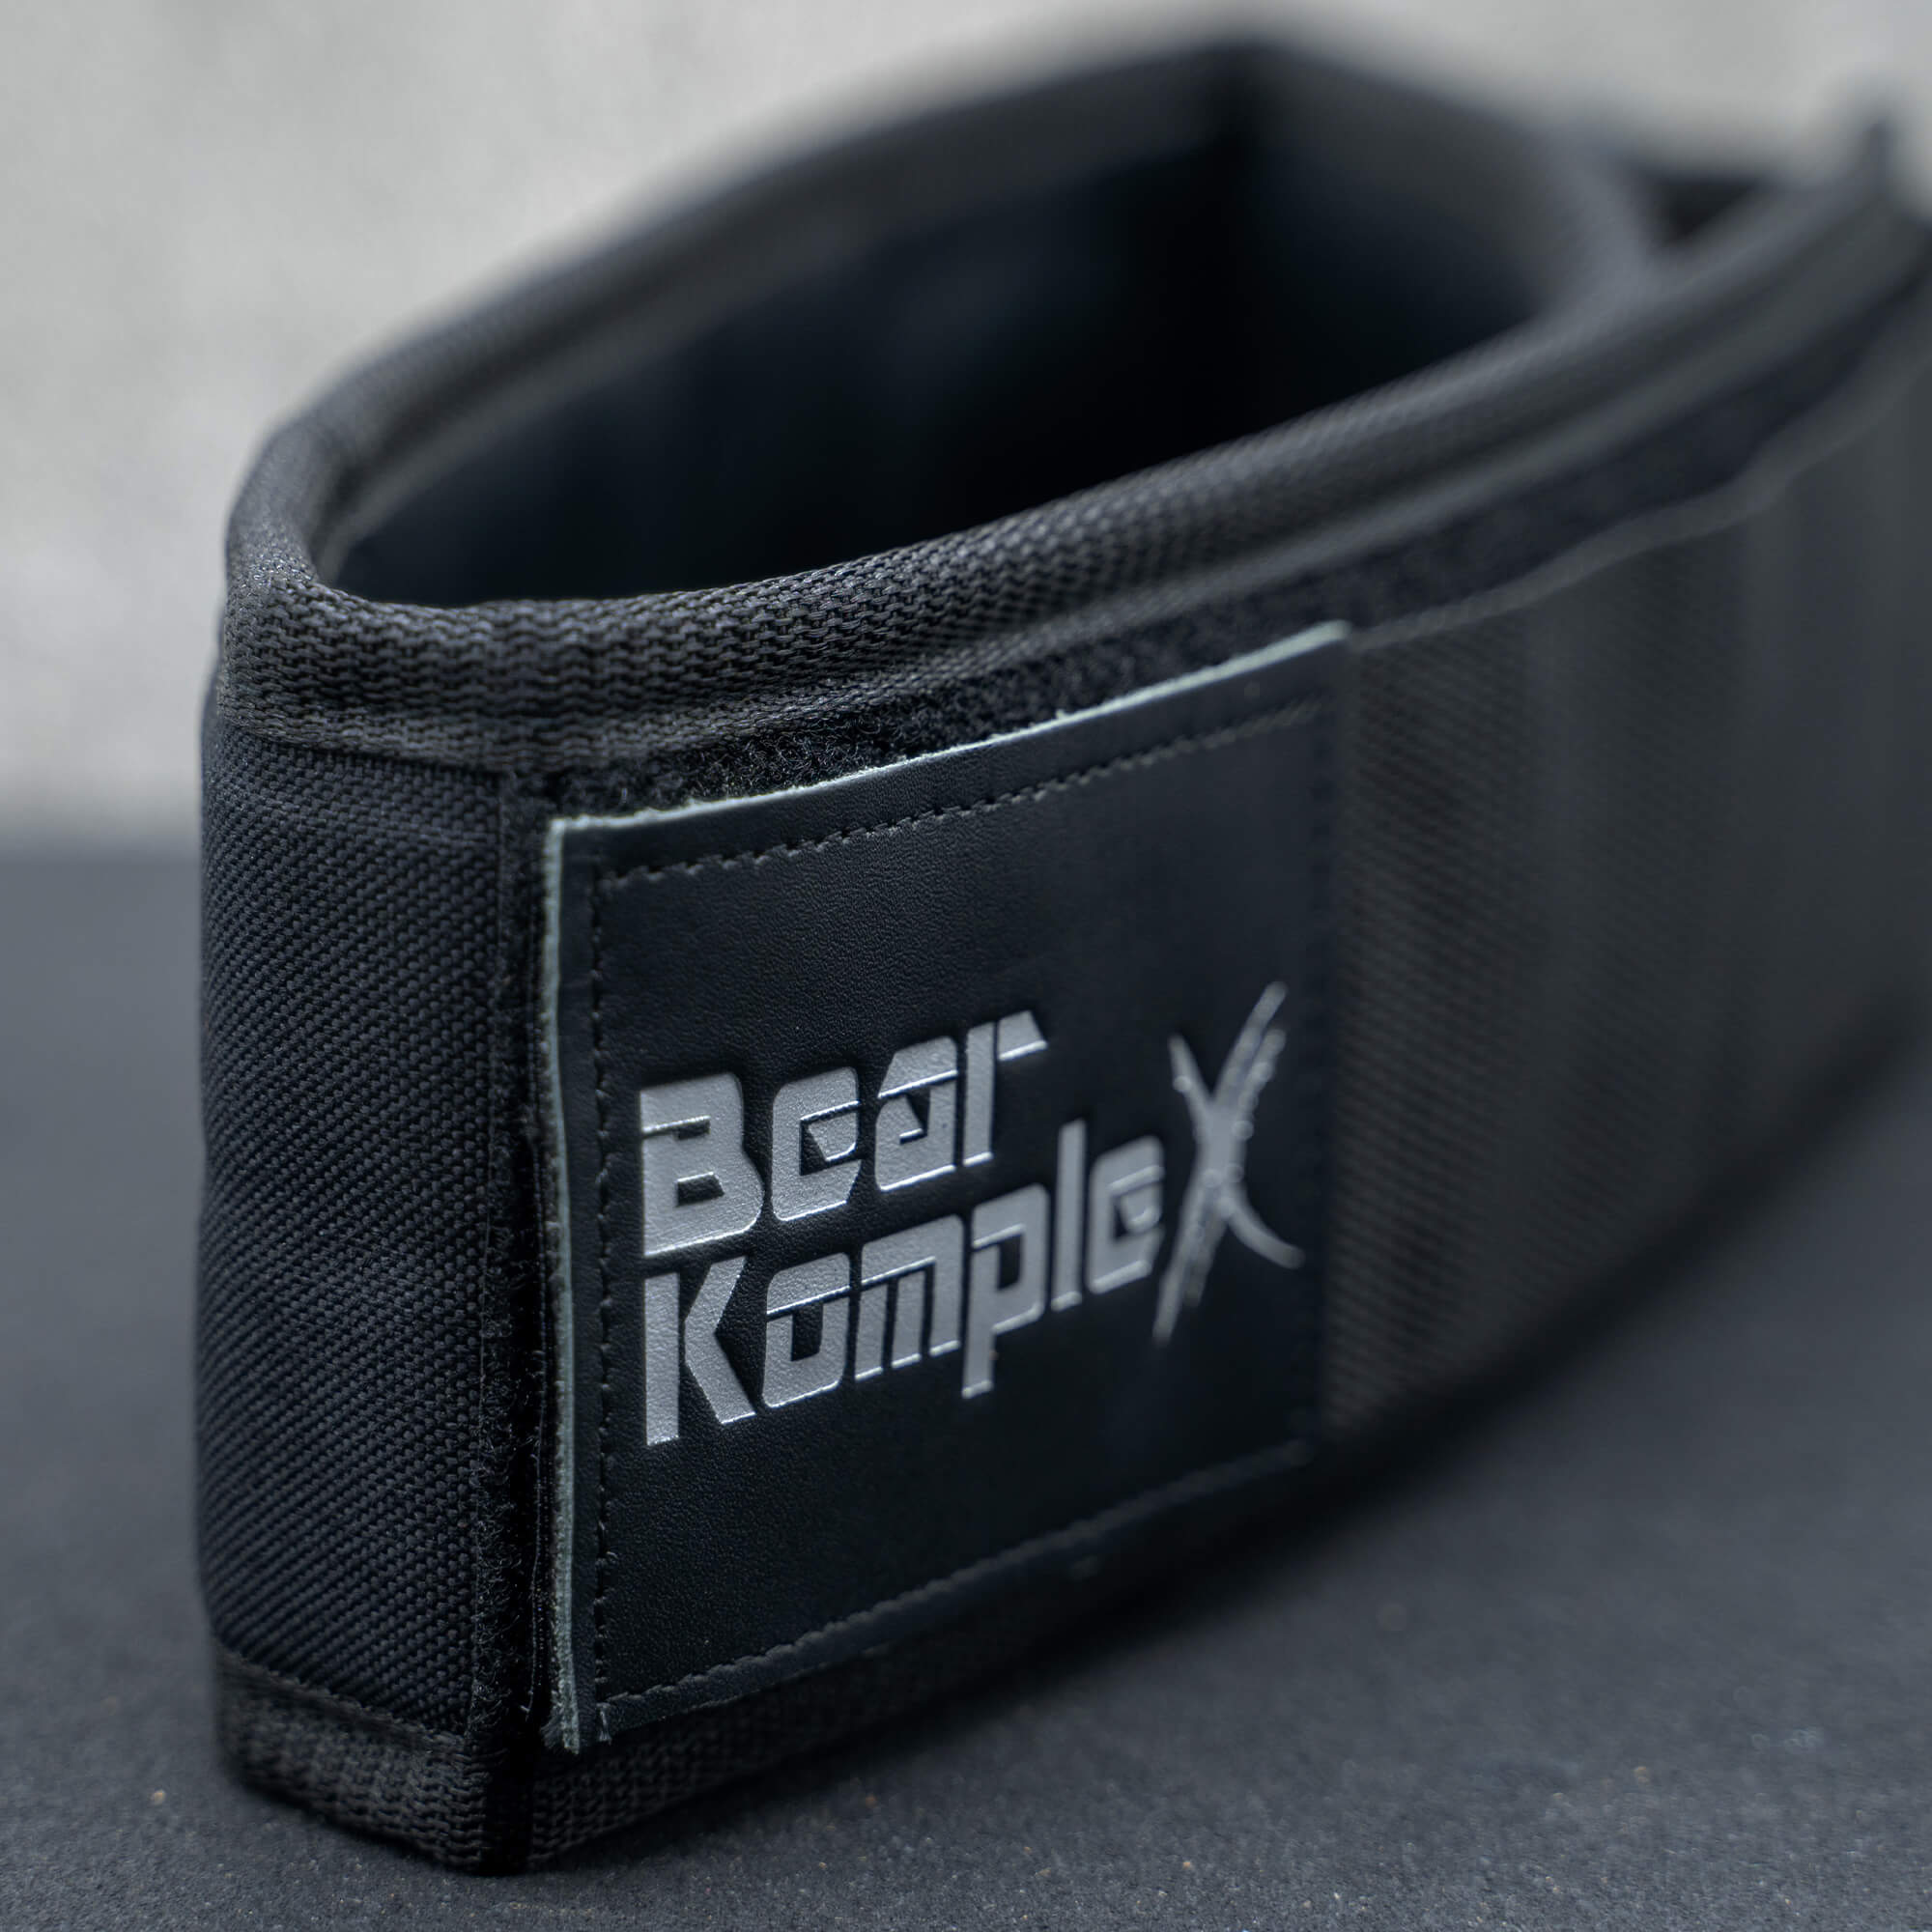 Bear KompleX APEX Premium Leather Velcro Weight Lifting Belt